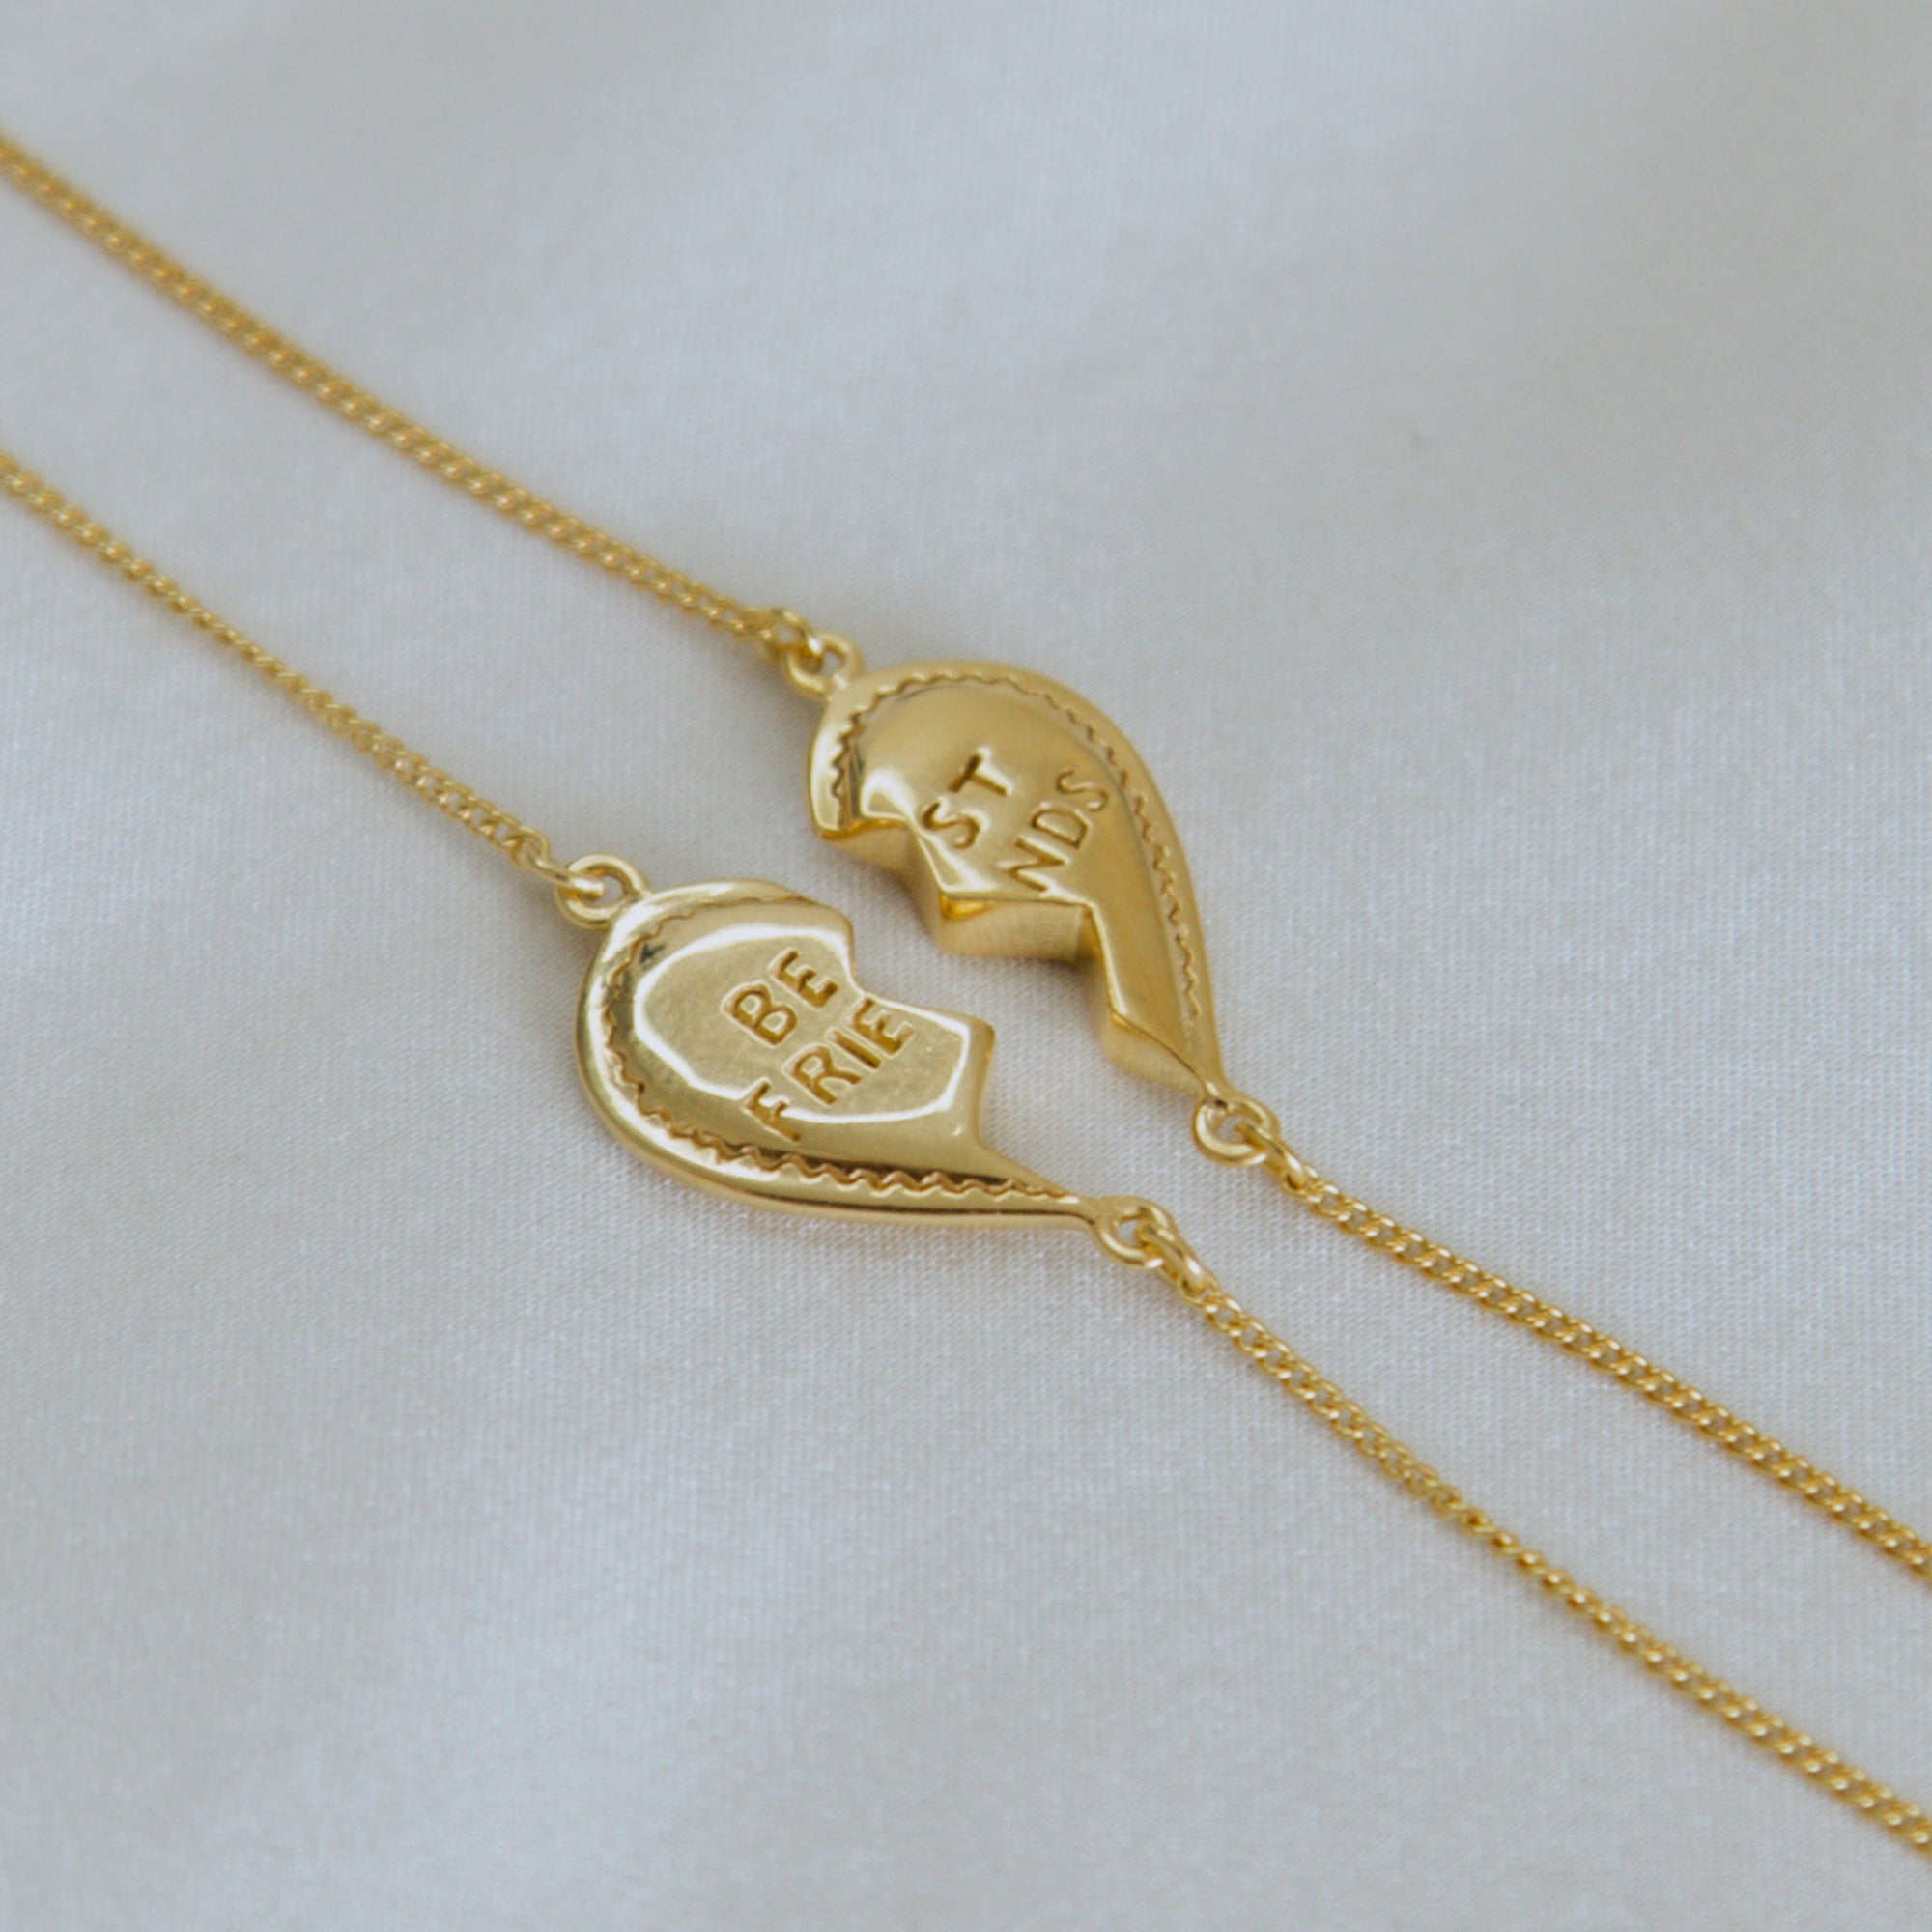 Lock & Key BFF Necklace SET - Silver - Luna & Rose Jewellery